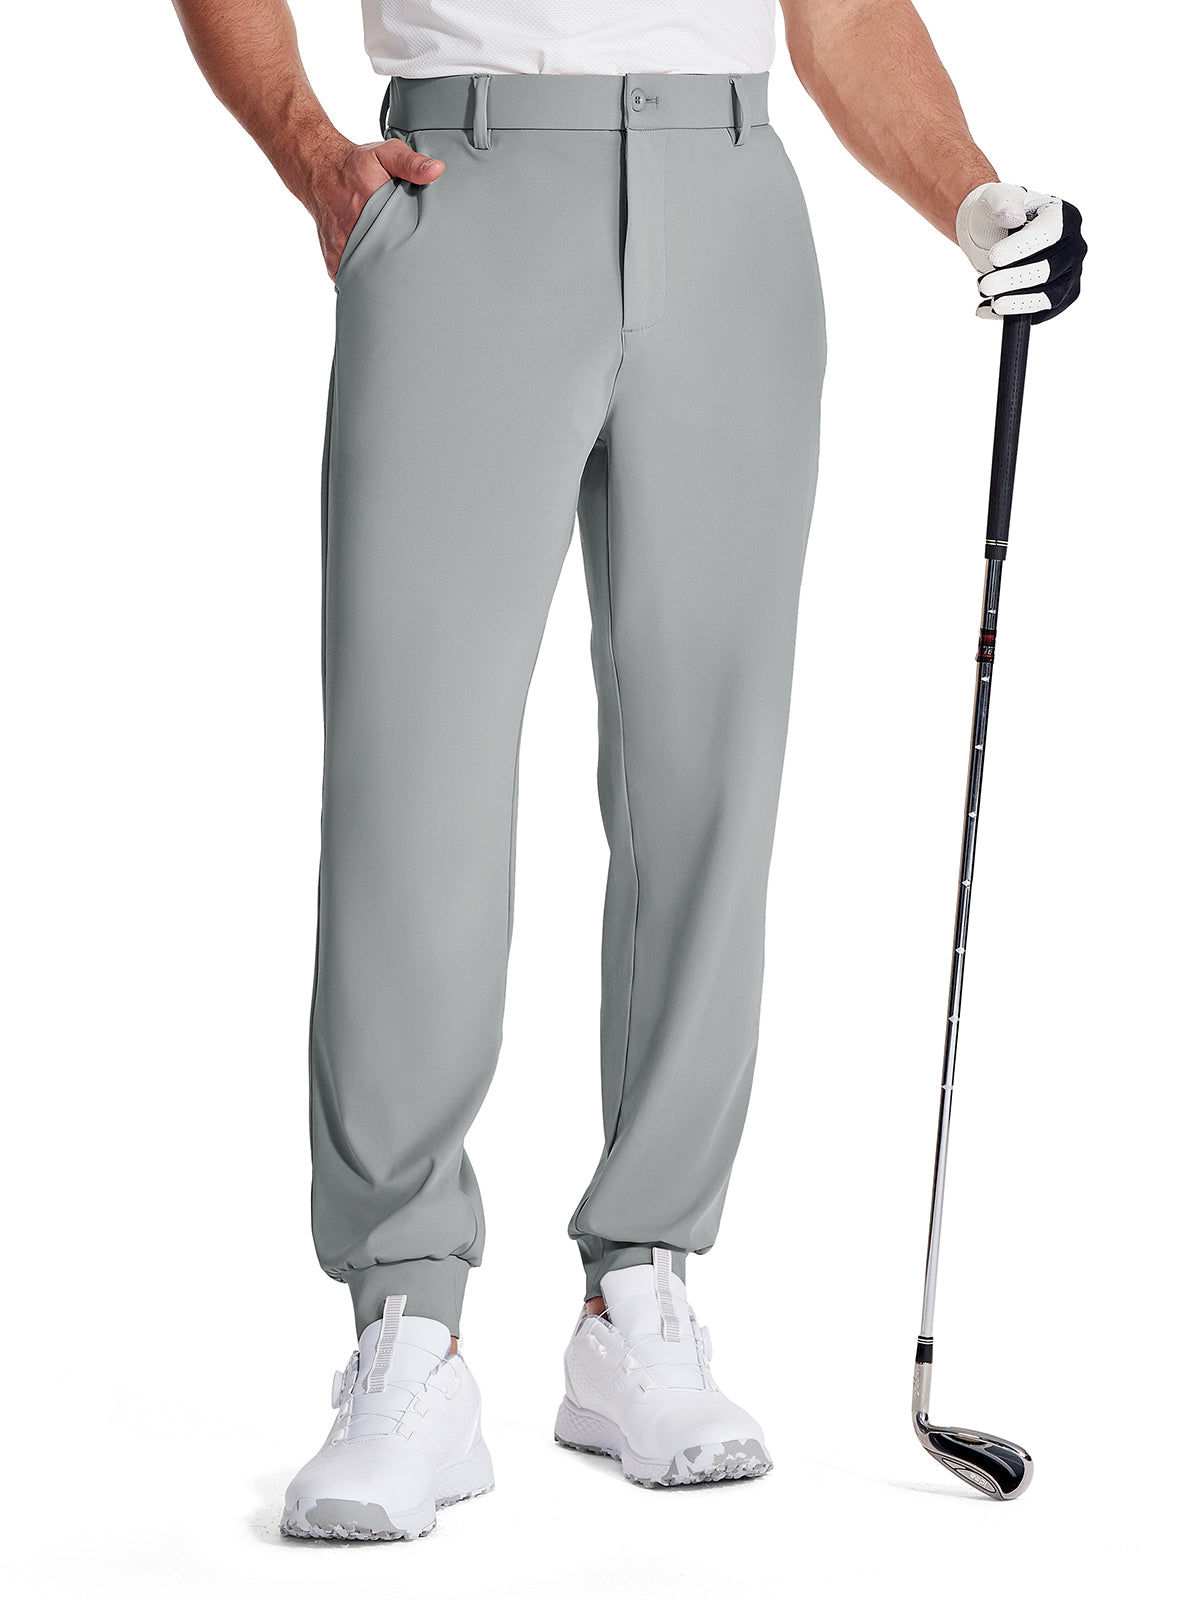 SupremeFlex Grey Golf Pants